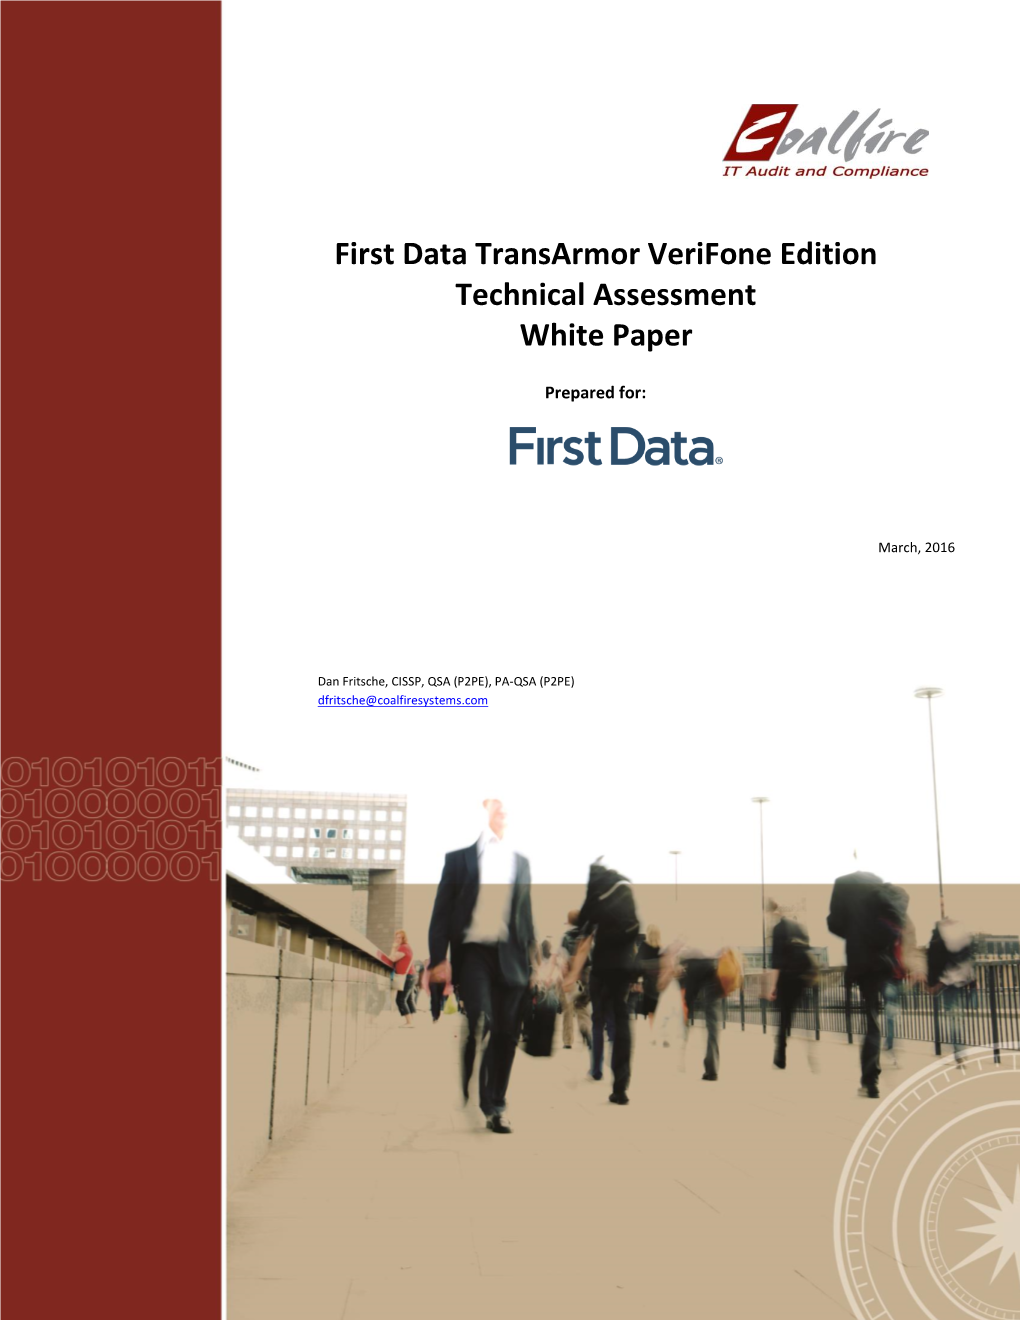 First Data Transarmor Verifone Edition Technical Assessment White Paper